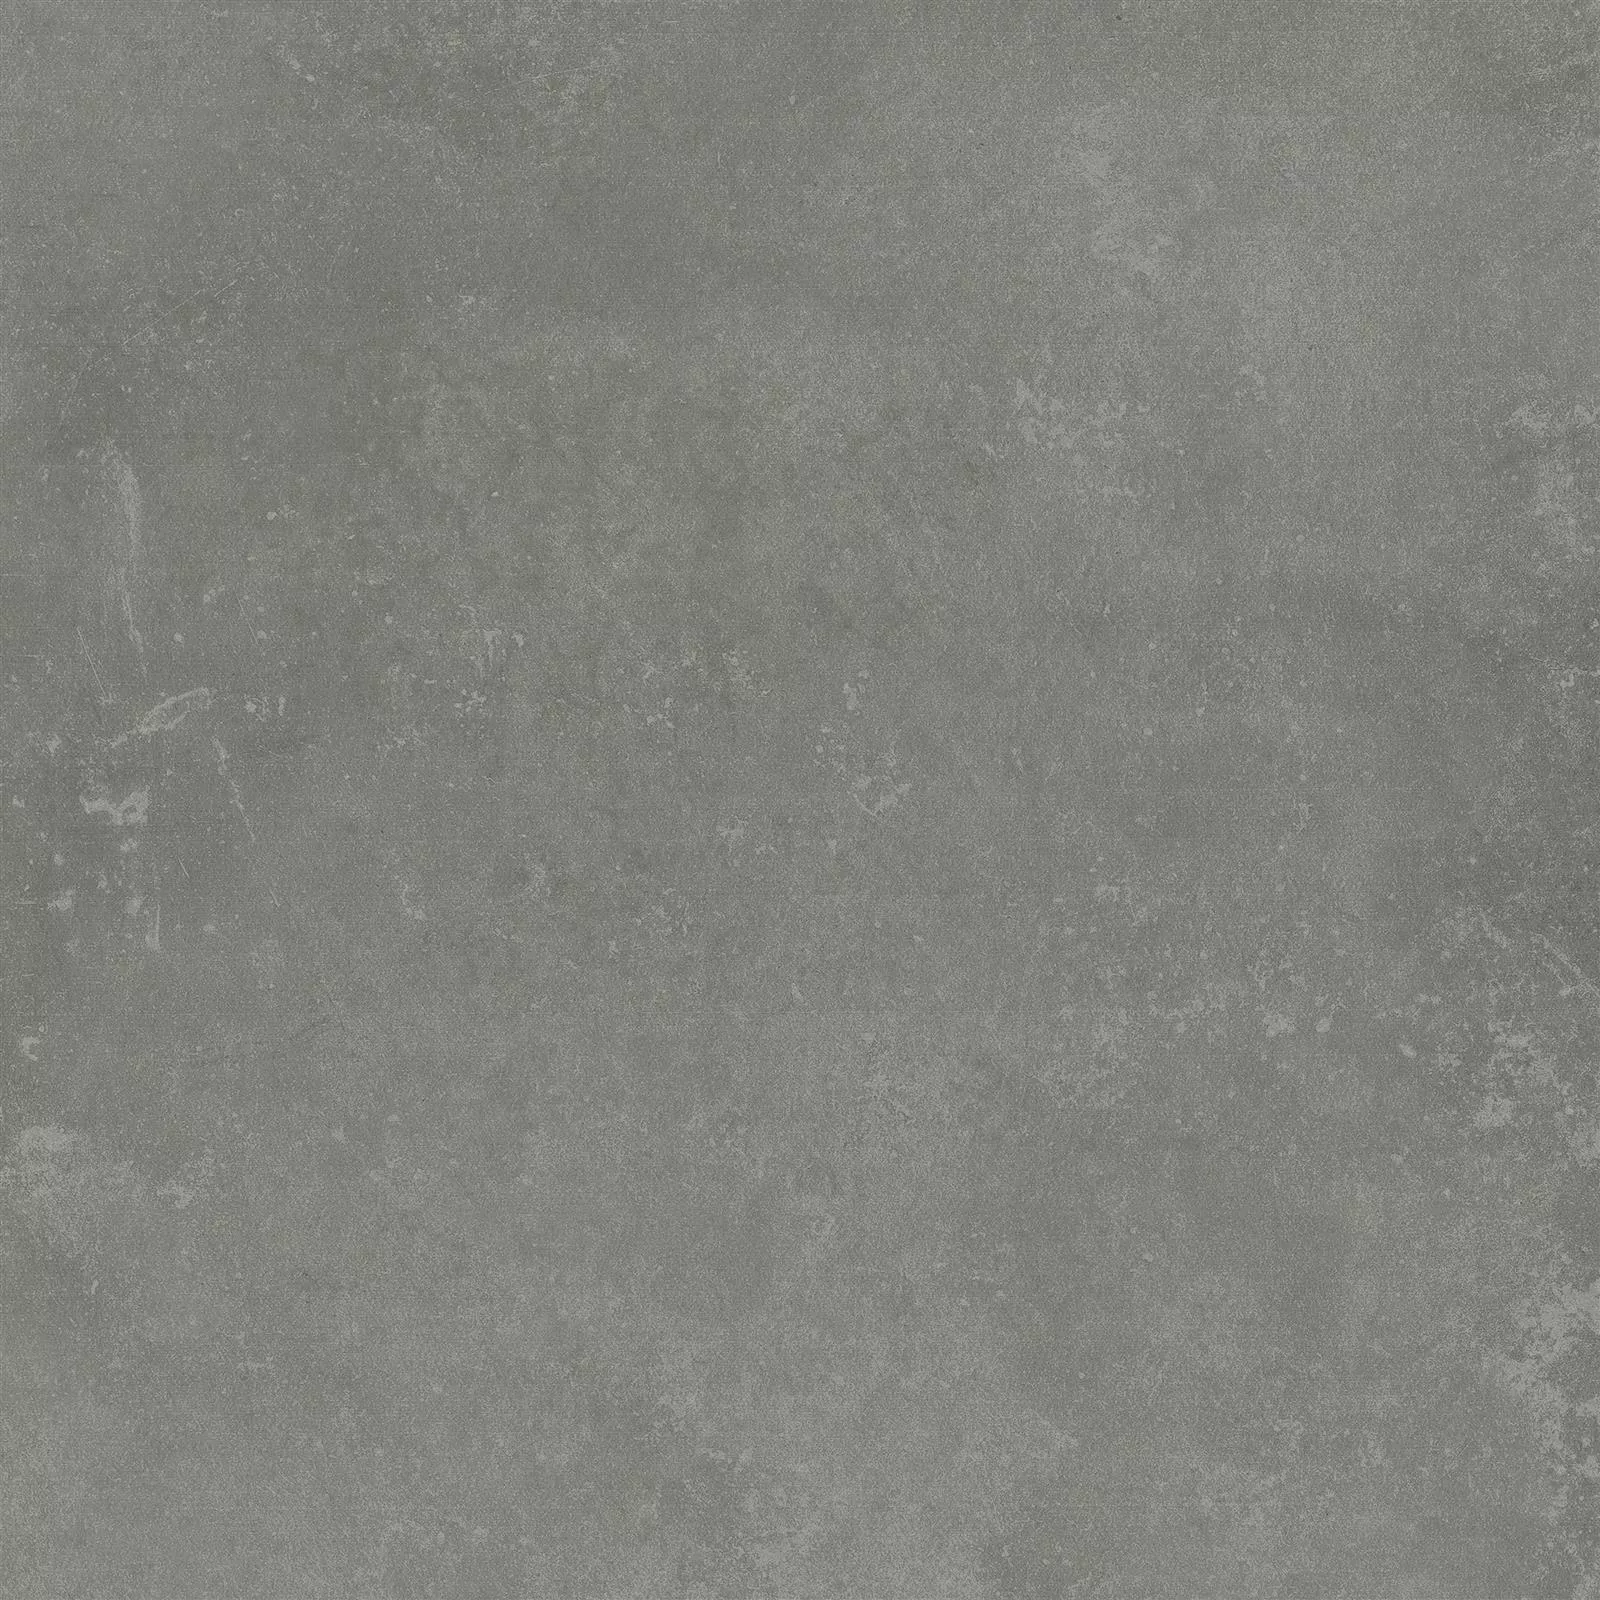 Sample Vloertegels Cement Optic Nepal Slim Grijs Beige 60x60cm